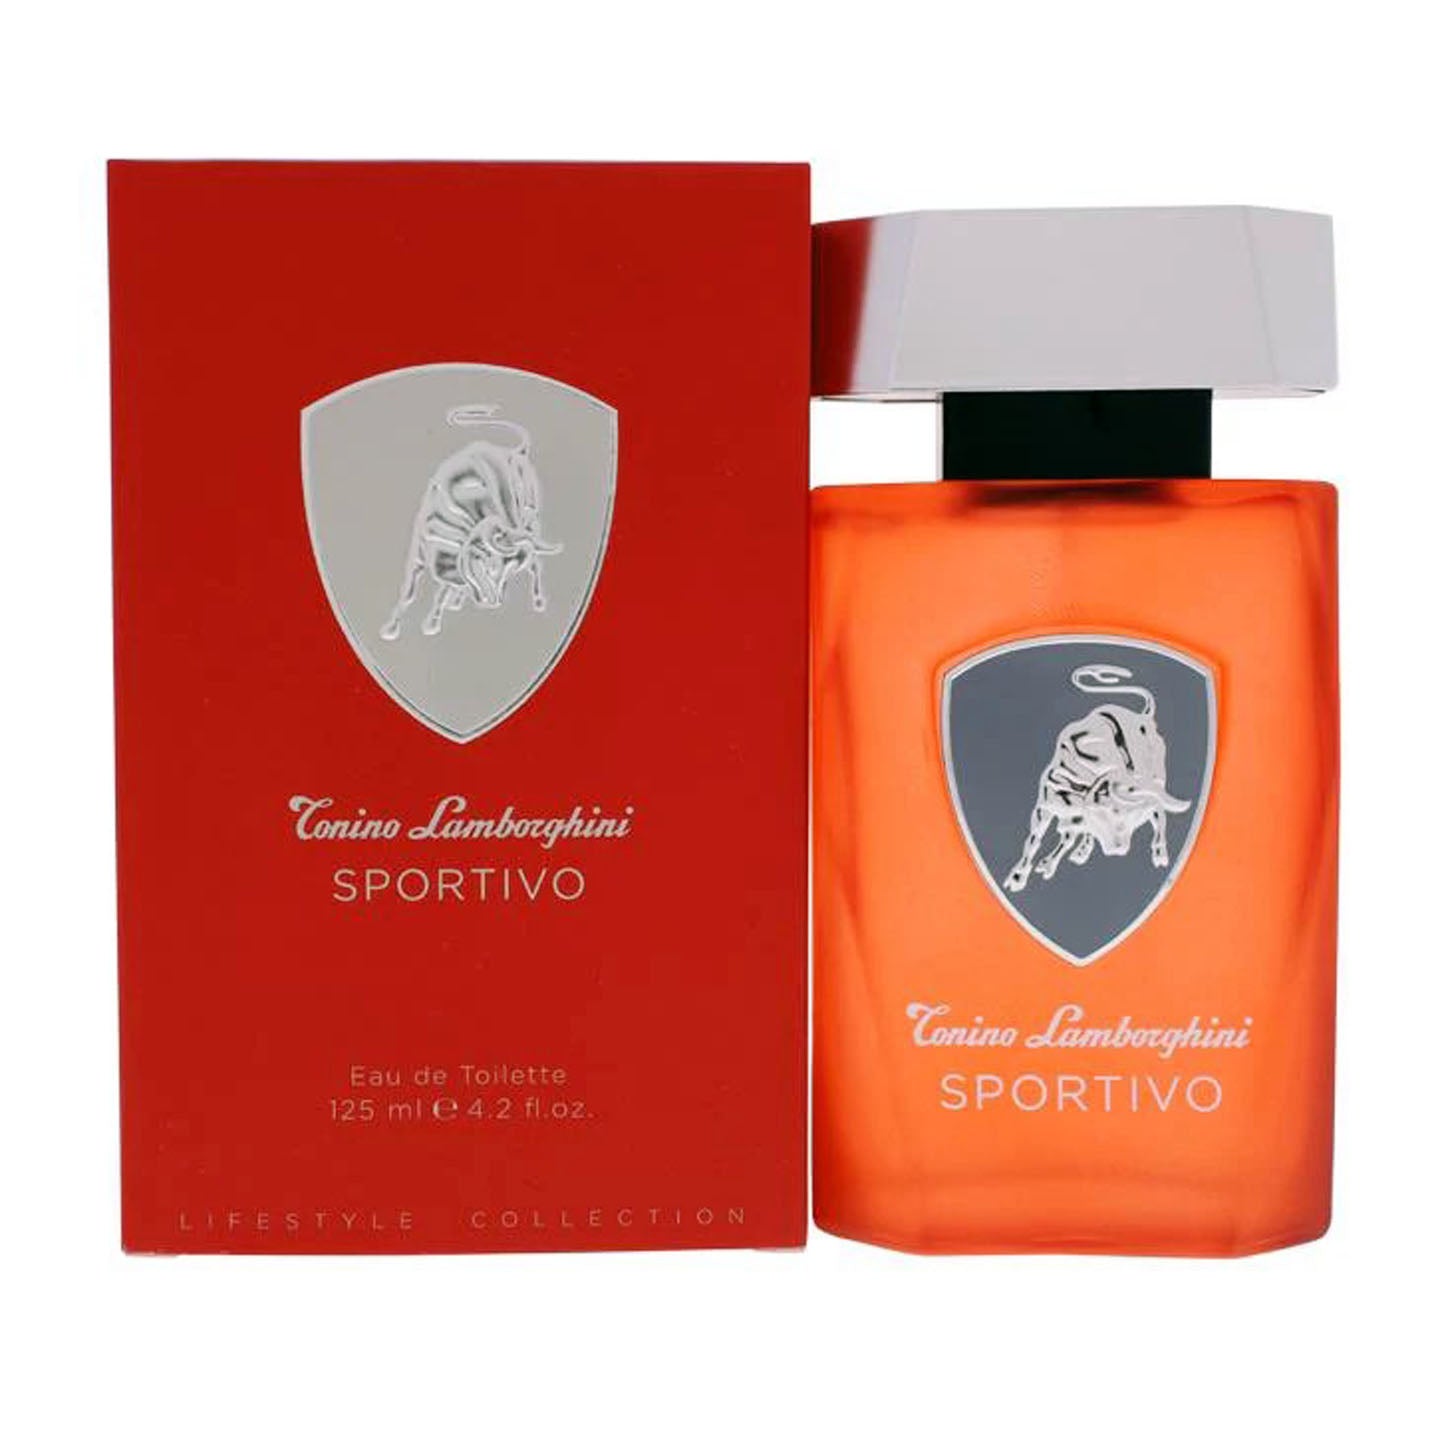 Tonino Lamborghini Sportivo Eau de Toilette Spray 125 ml for Men